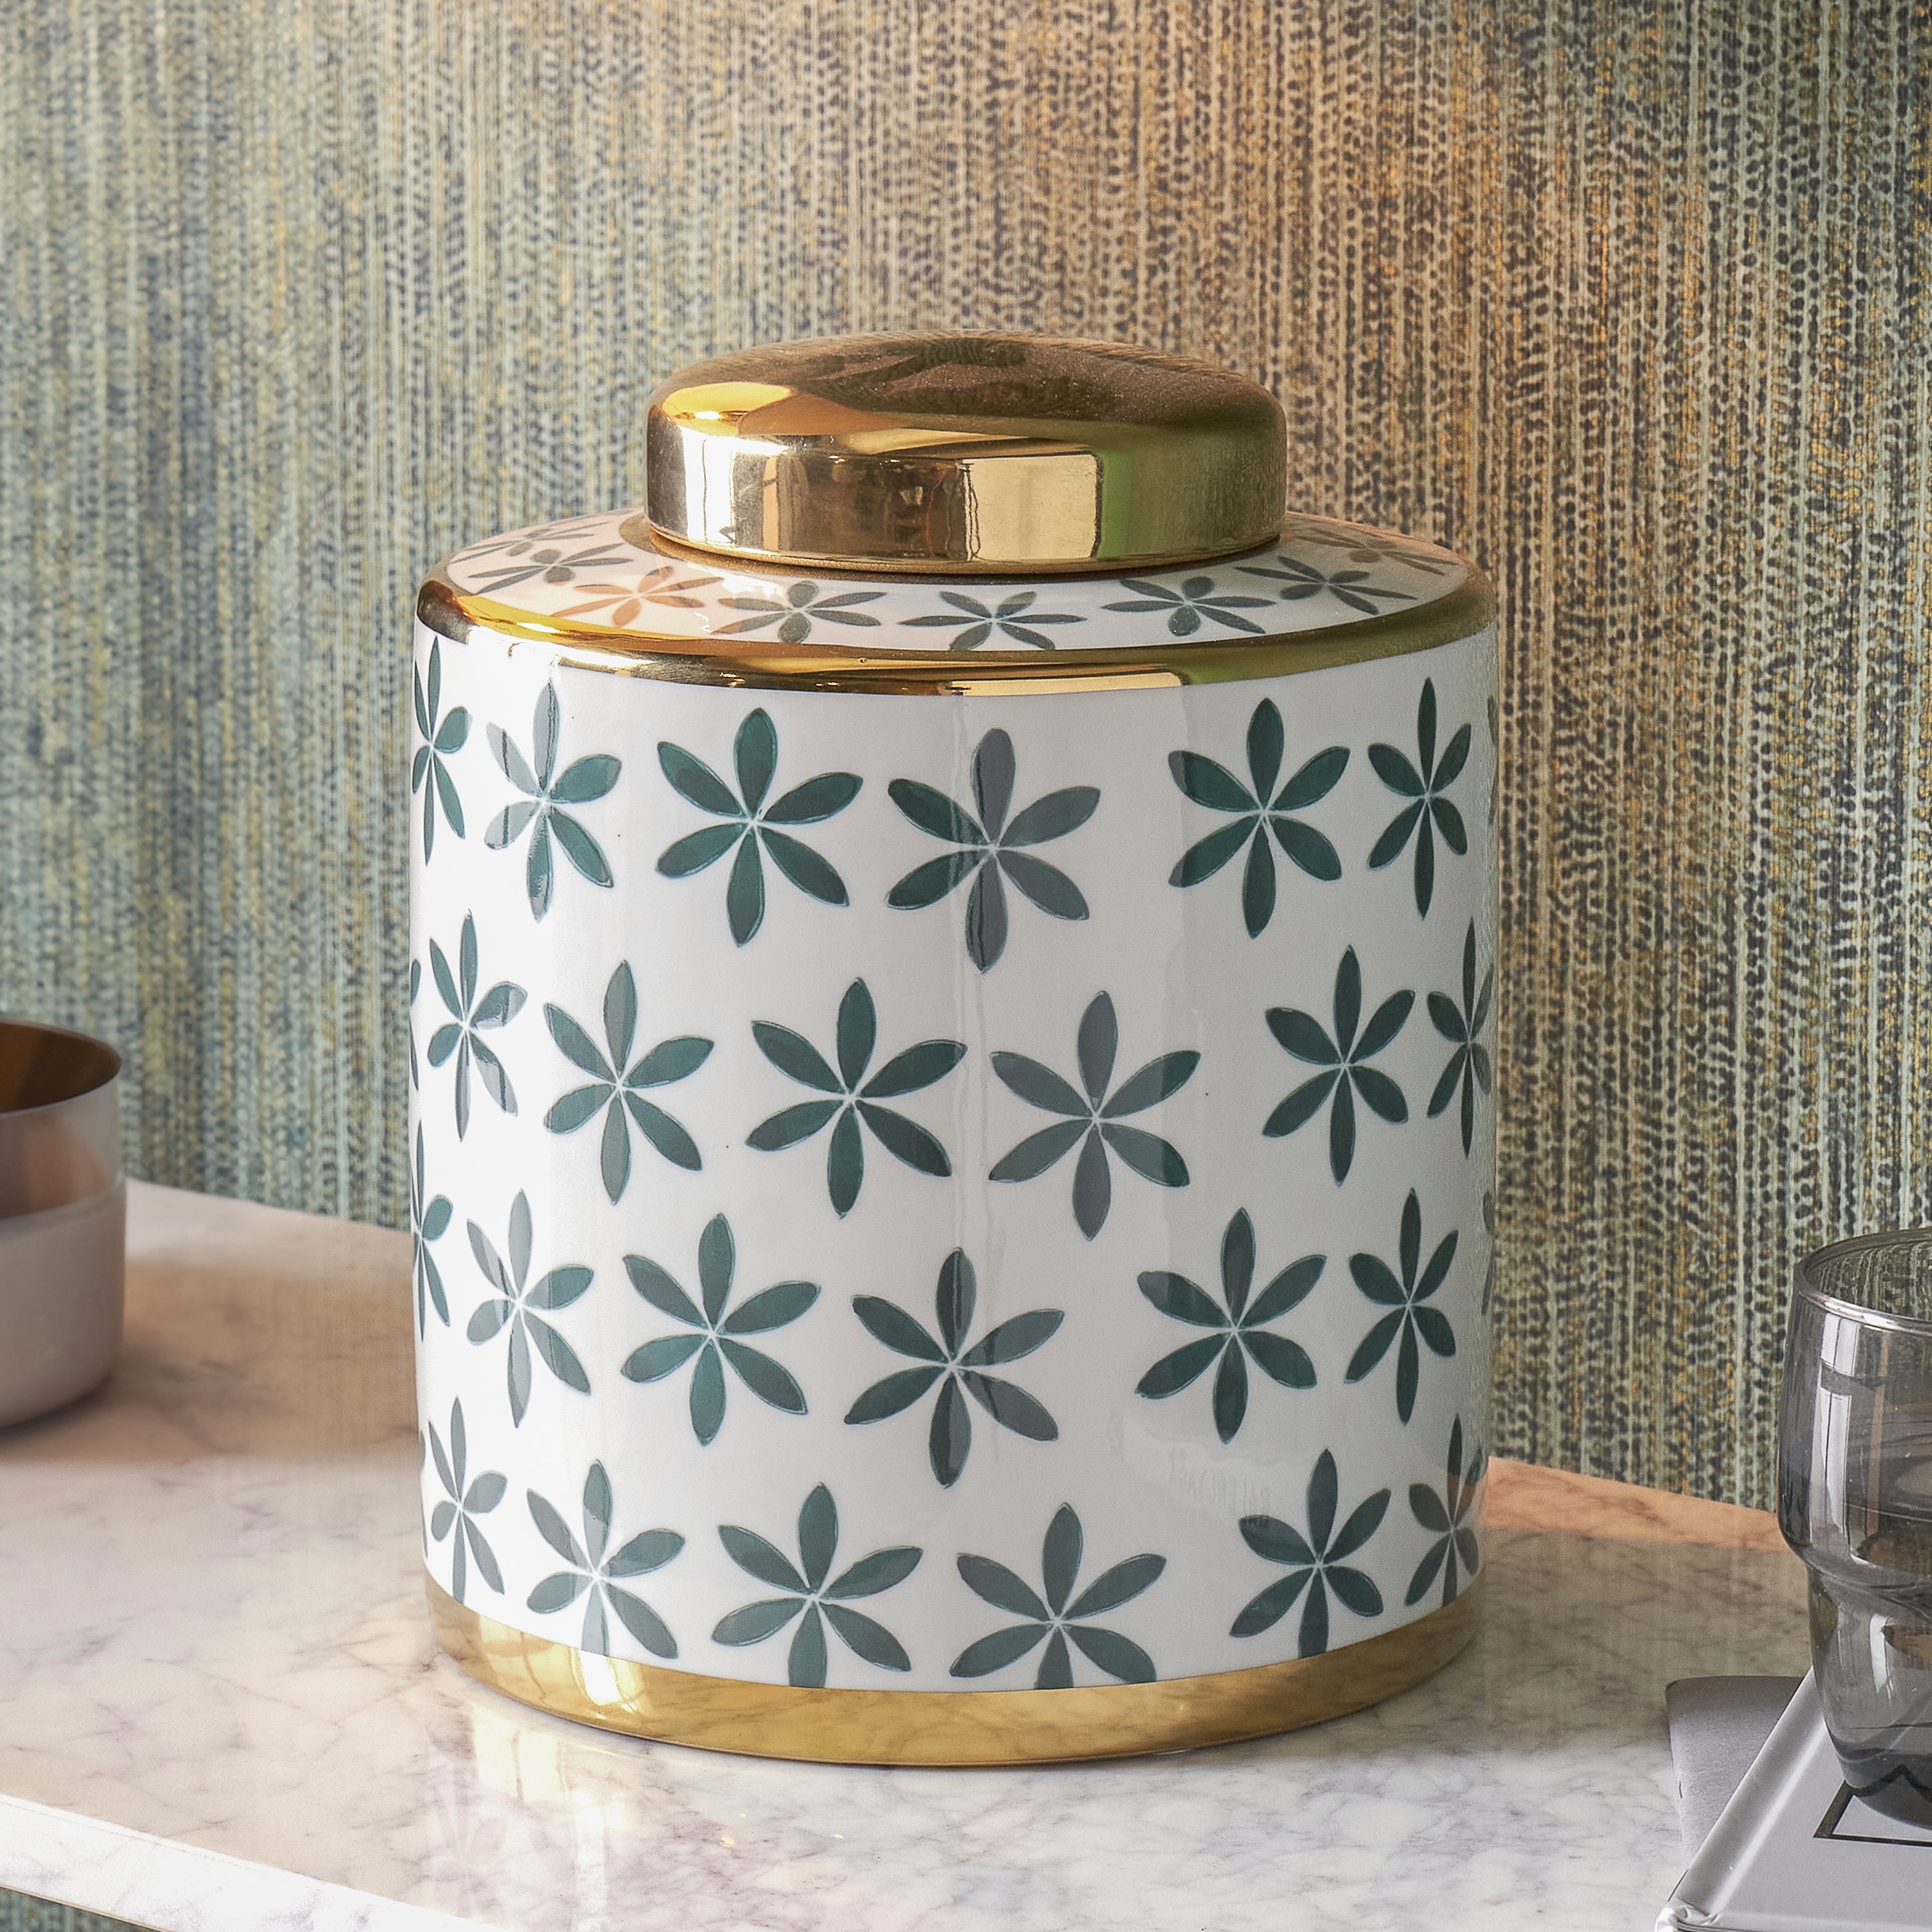 Thea Gold Leaf Ceramic Decorative Ginger Jar